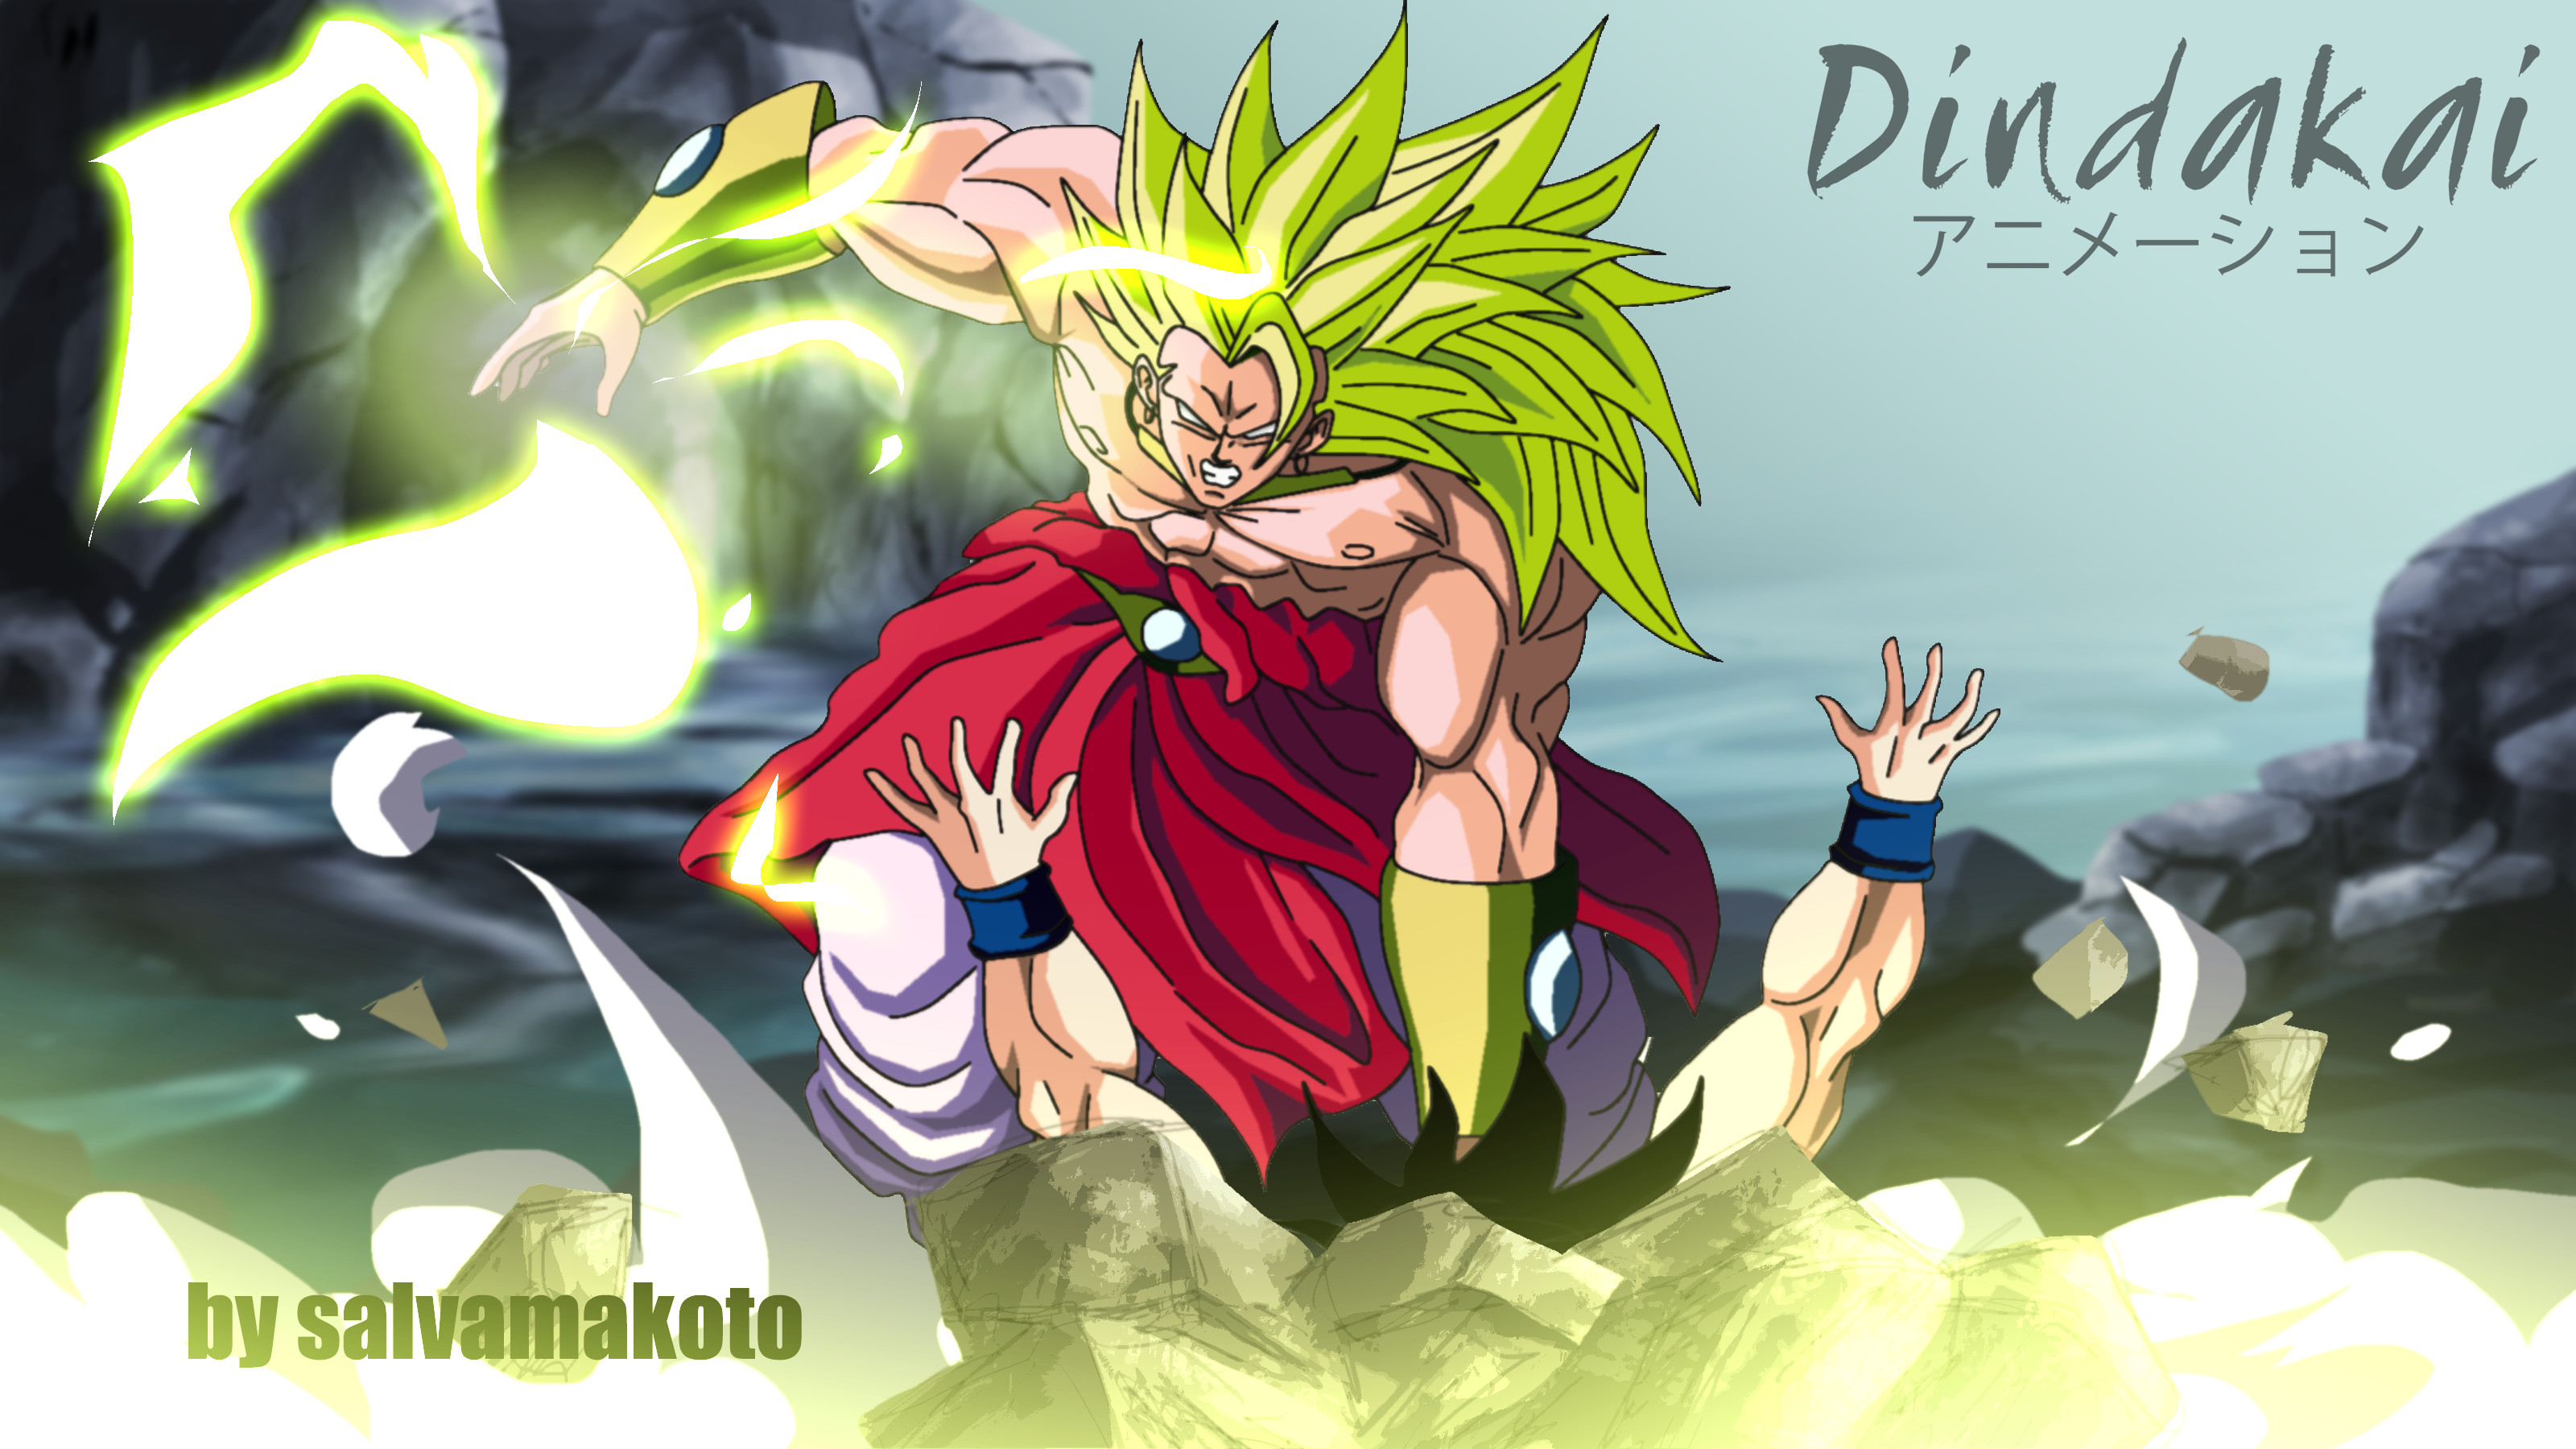 3200x1800 Broly ss3 vs Goku by dindakai on DeviantArt